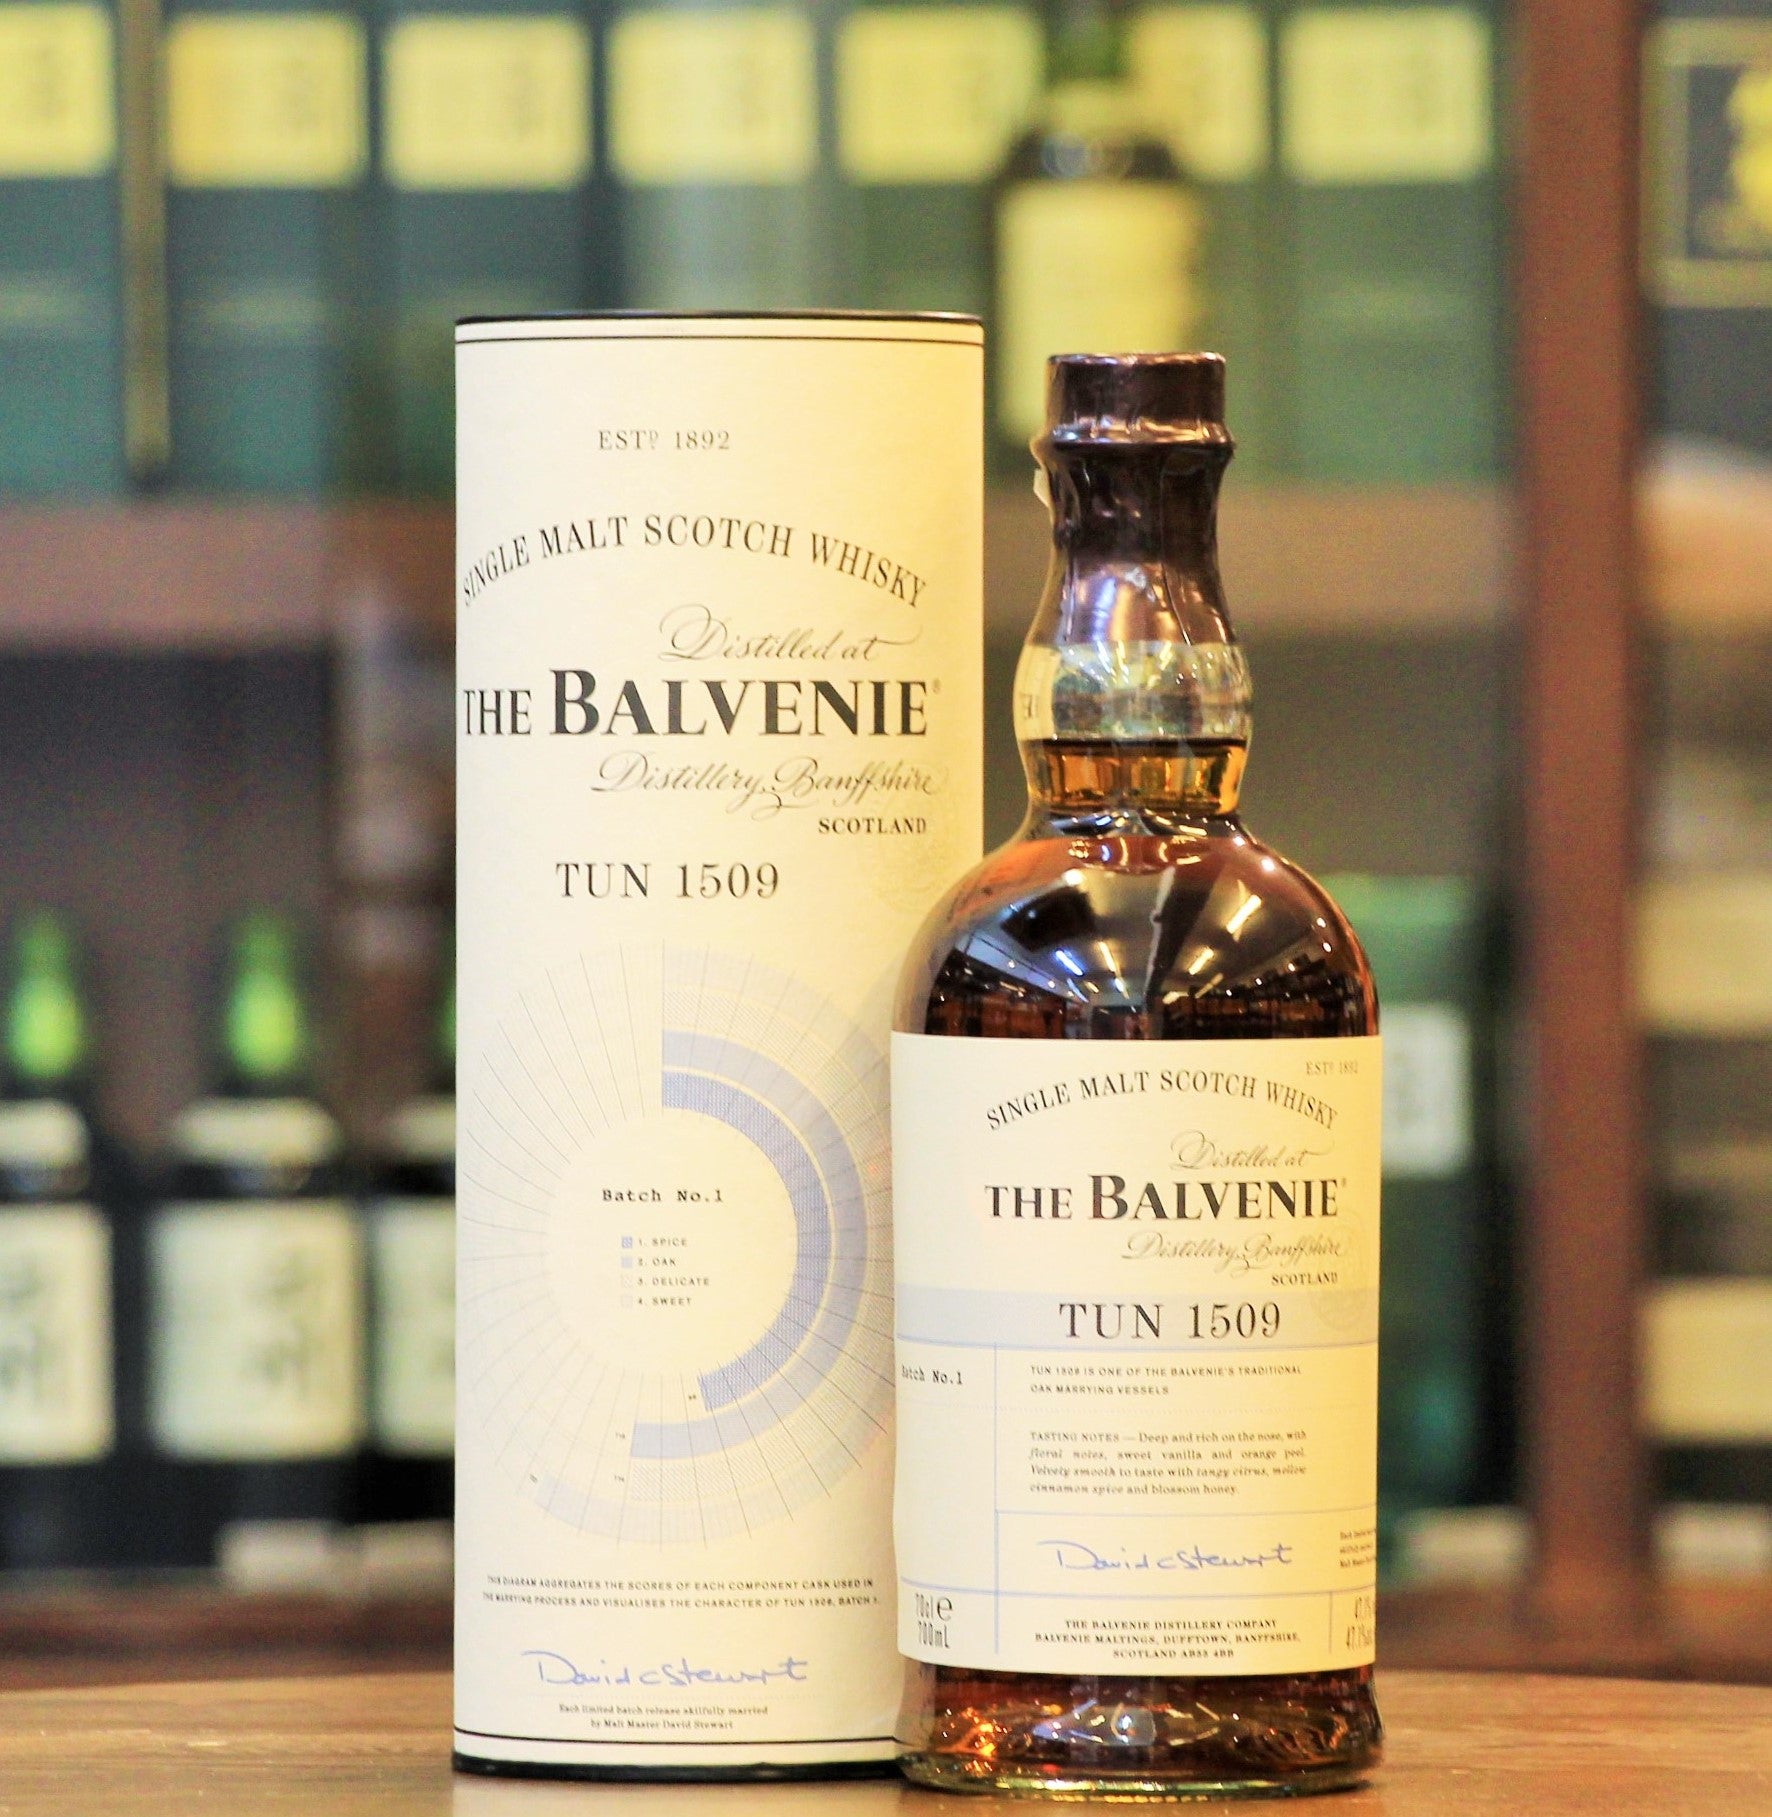 Balvenie Tun 1509 Batch No. 1 Single Malt Scotch Whisky 2014 Release